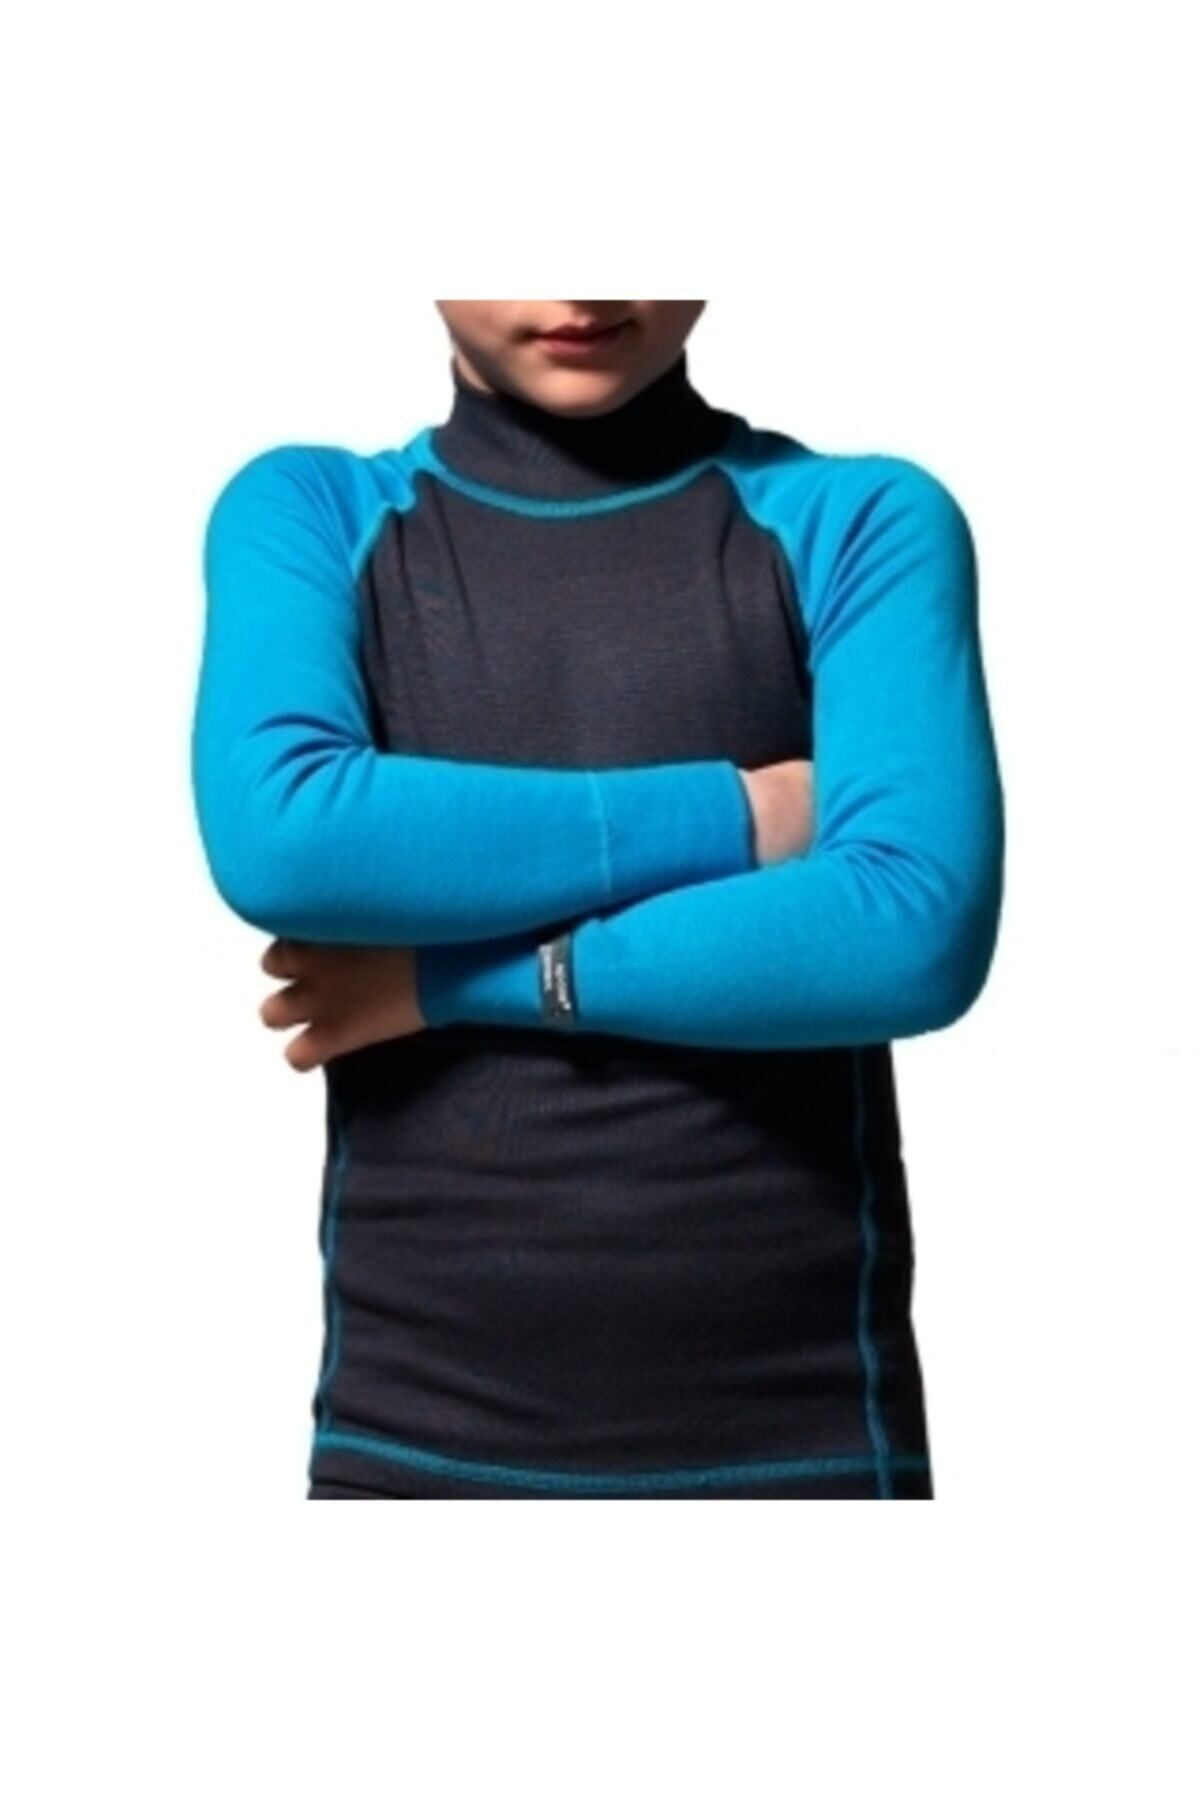 Korayspor Thermal Sports Çocuk T-shırt Mavi 104/110